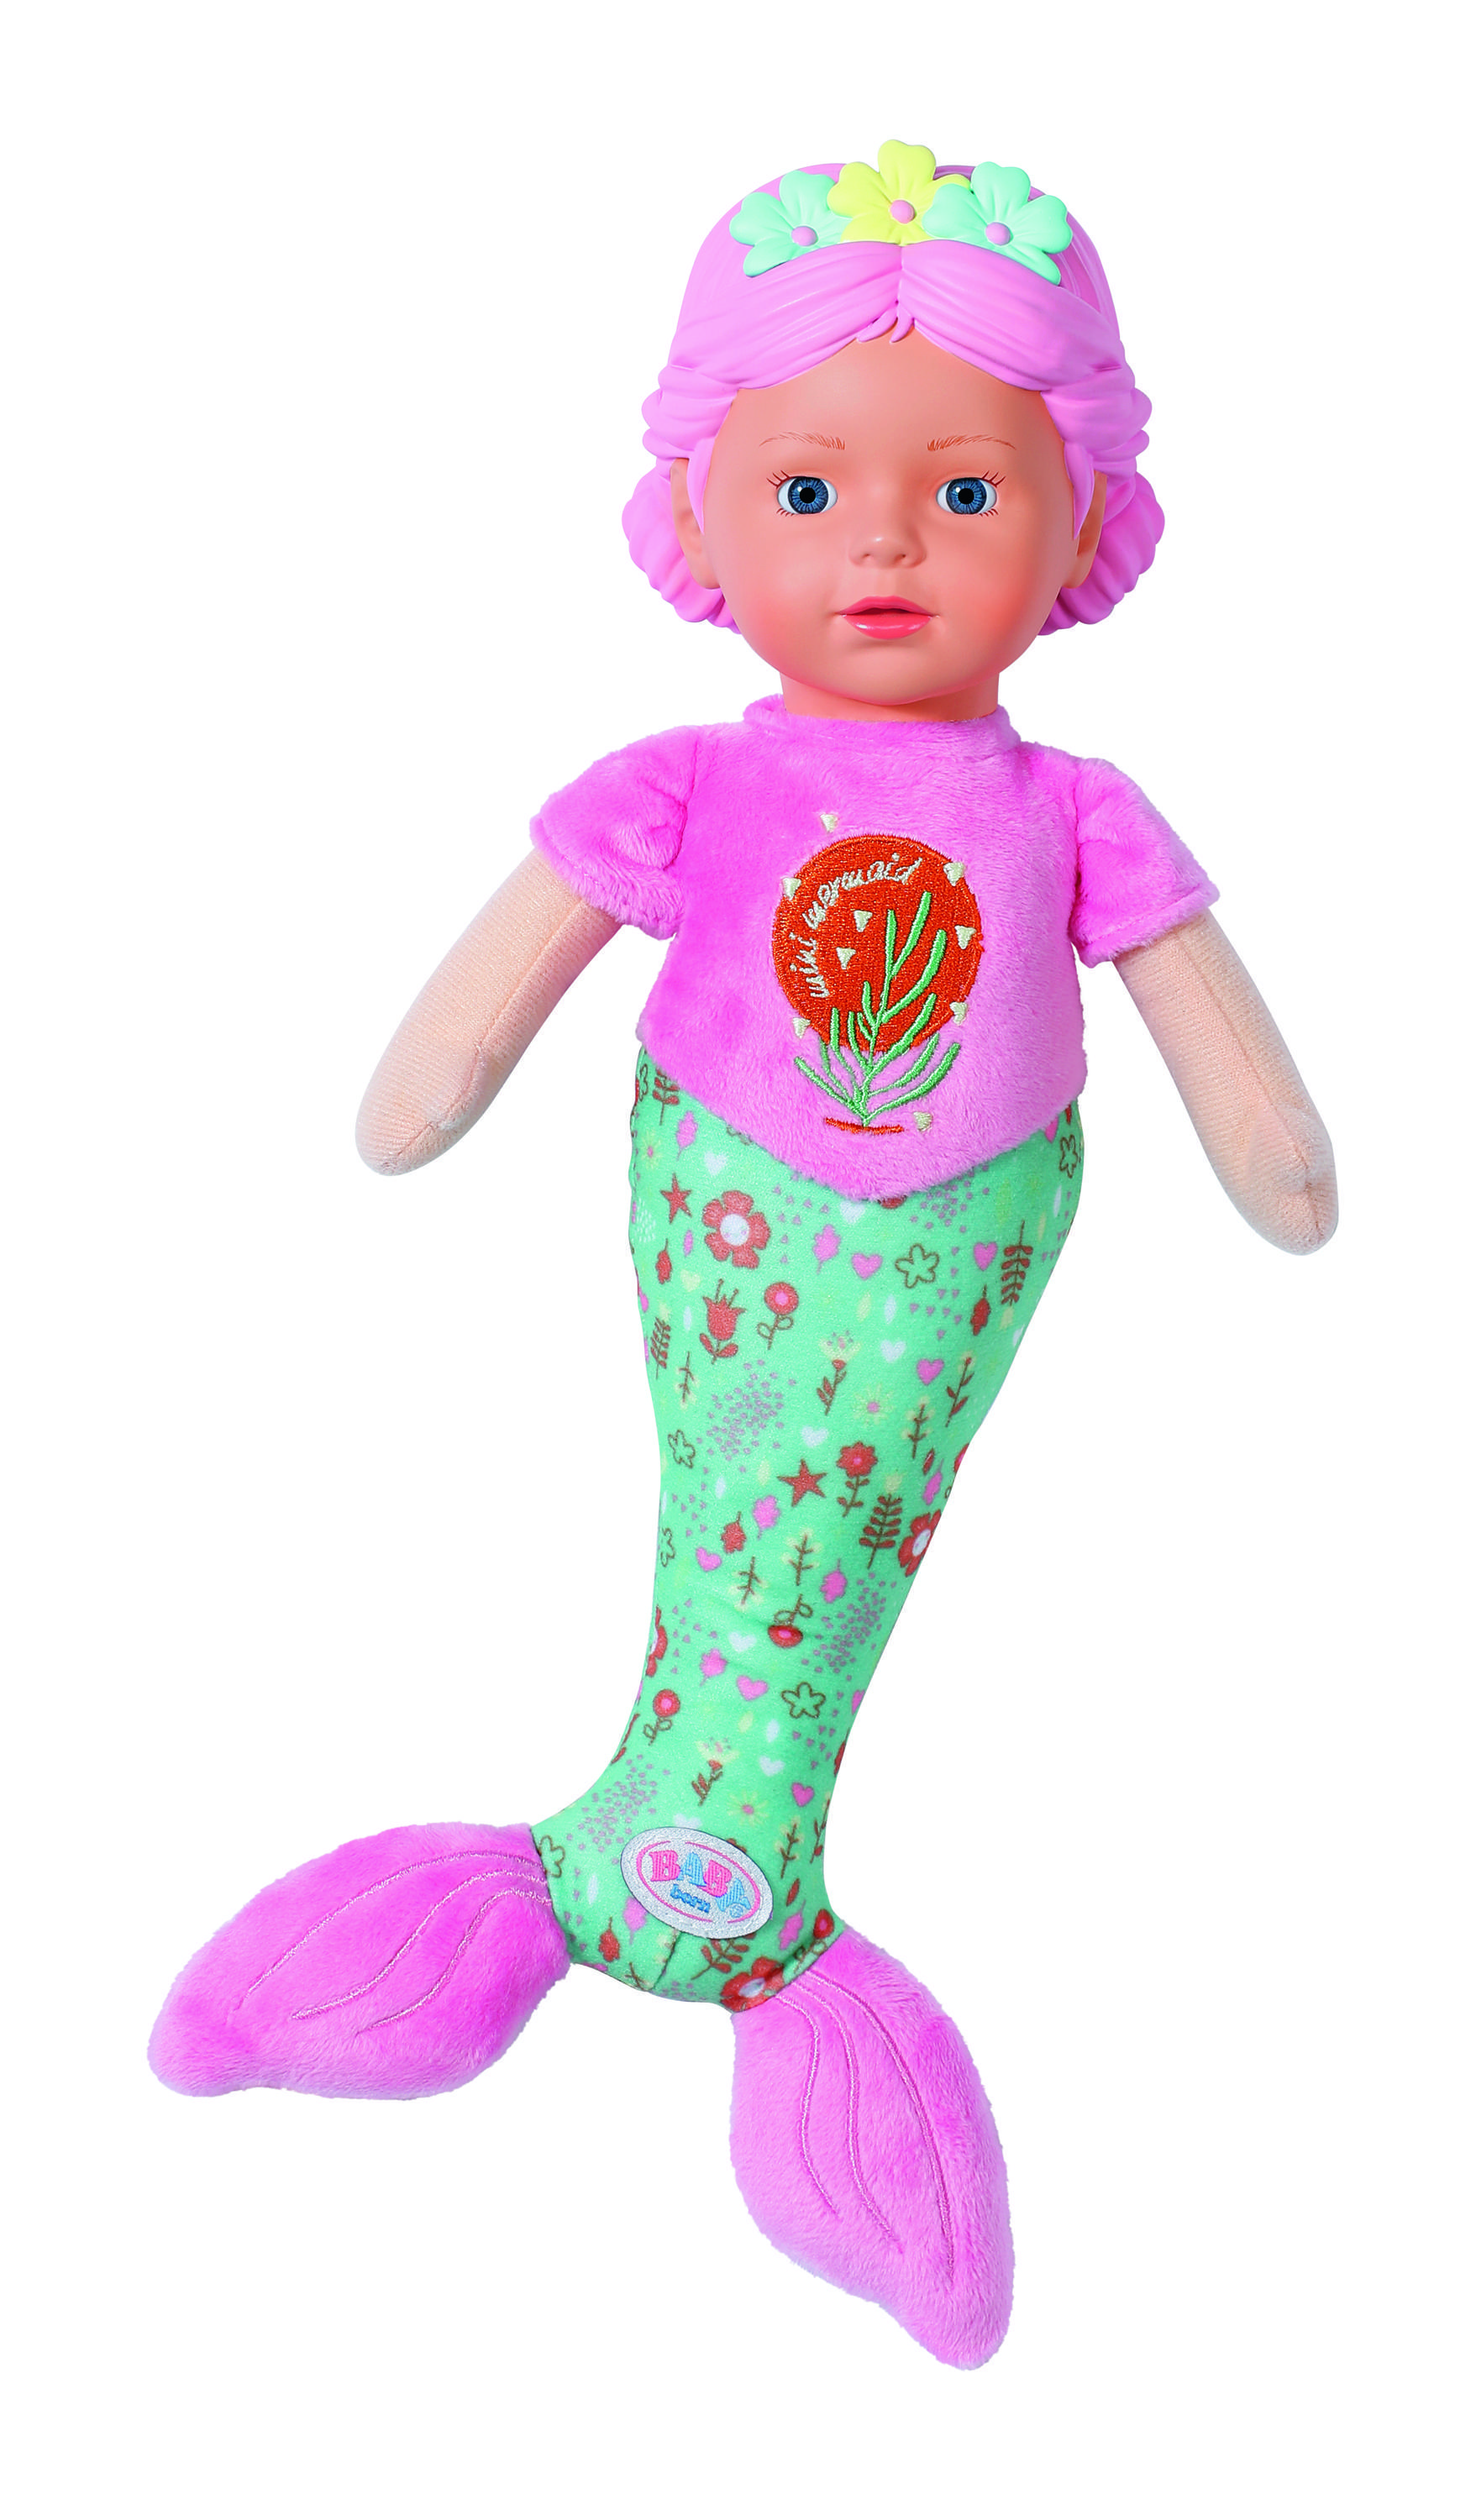 BABY born - Mermaid for babies 26cm (832288)